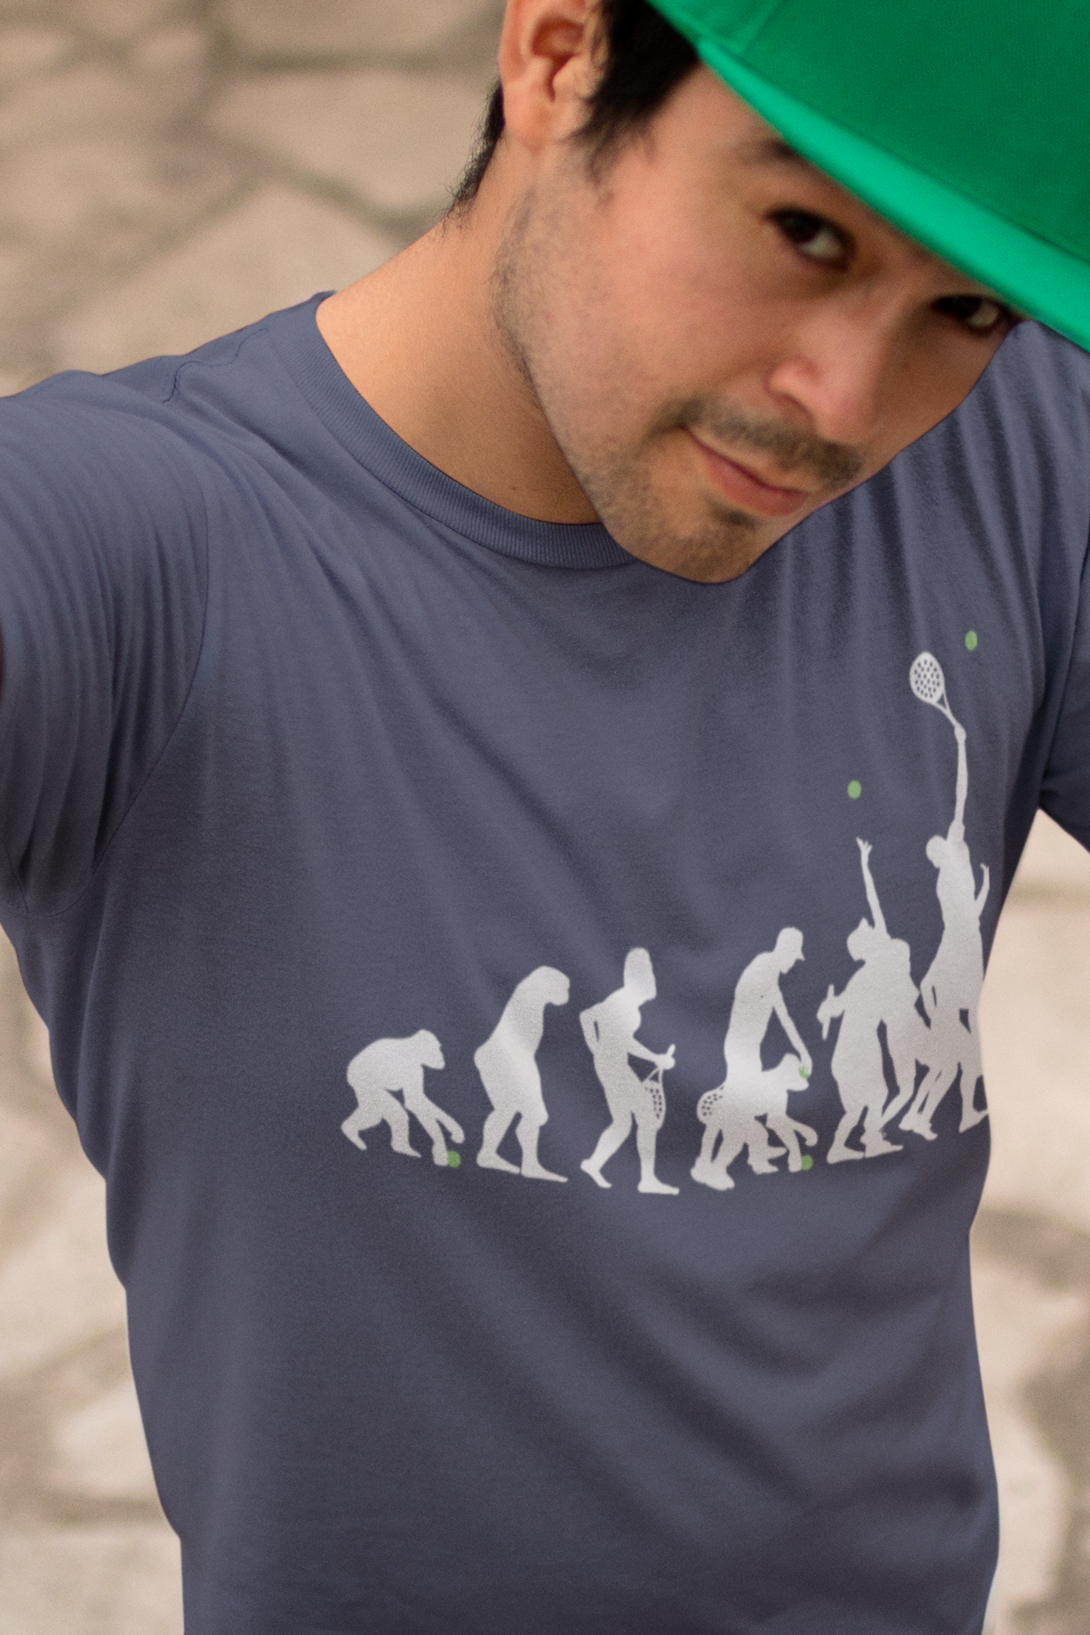 Tennis Evolution Printed T-Shirt For Men - WowWaves - 3